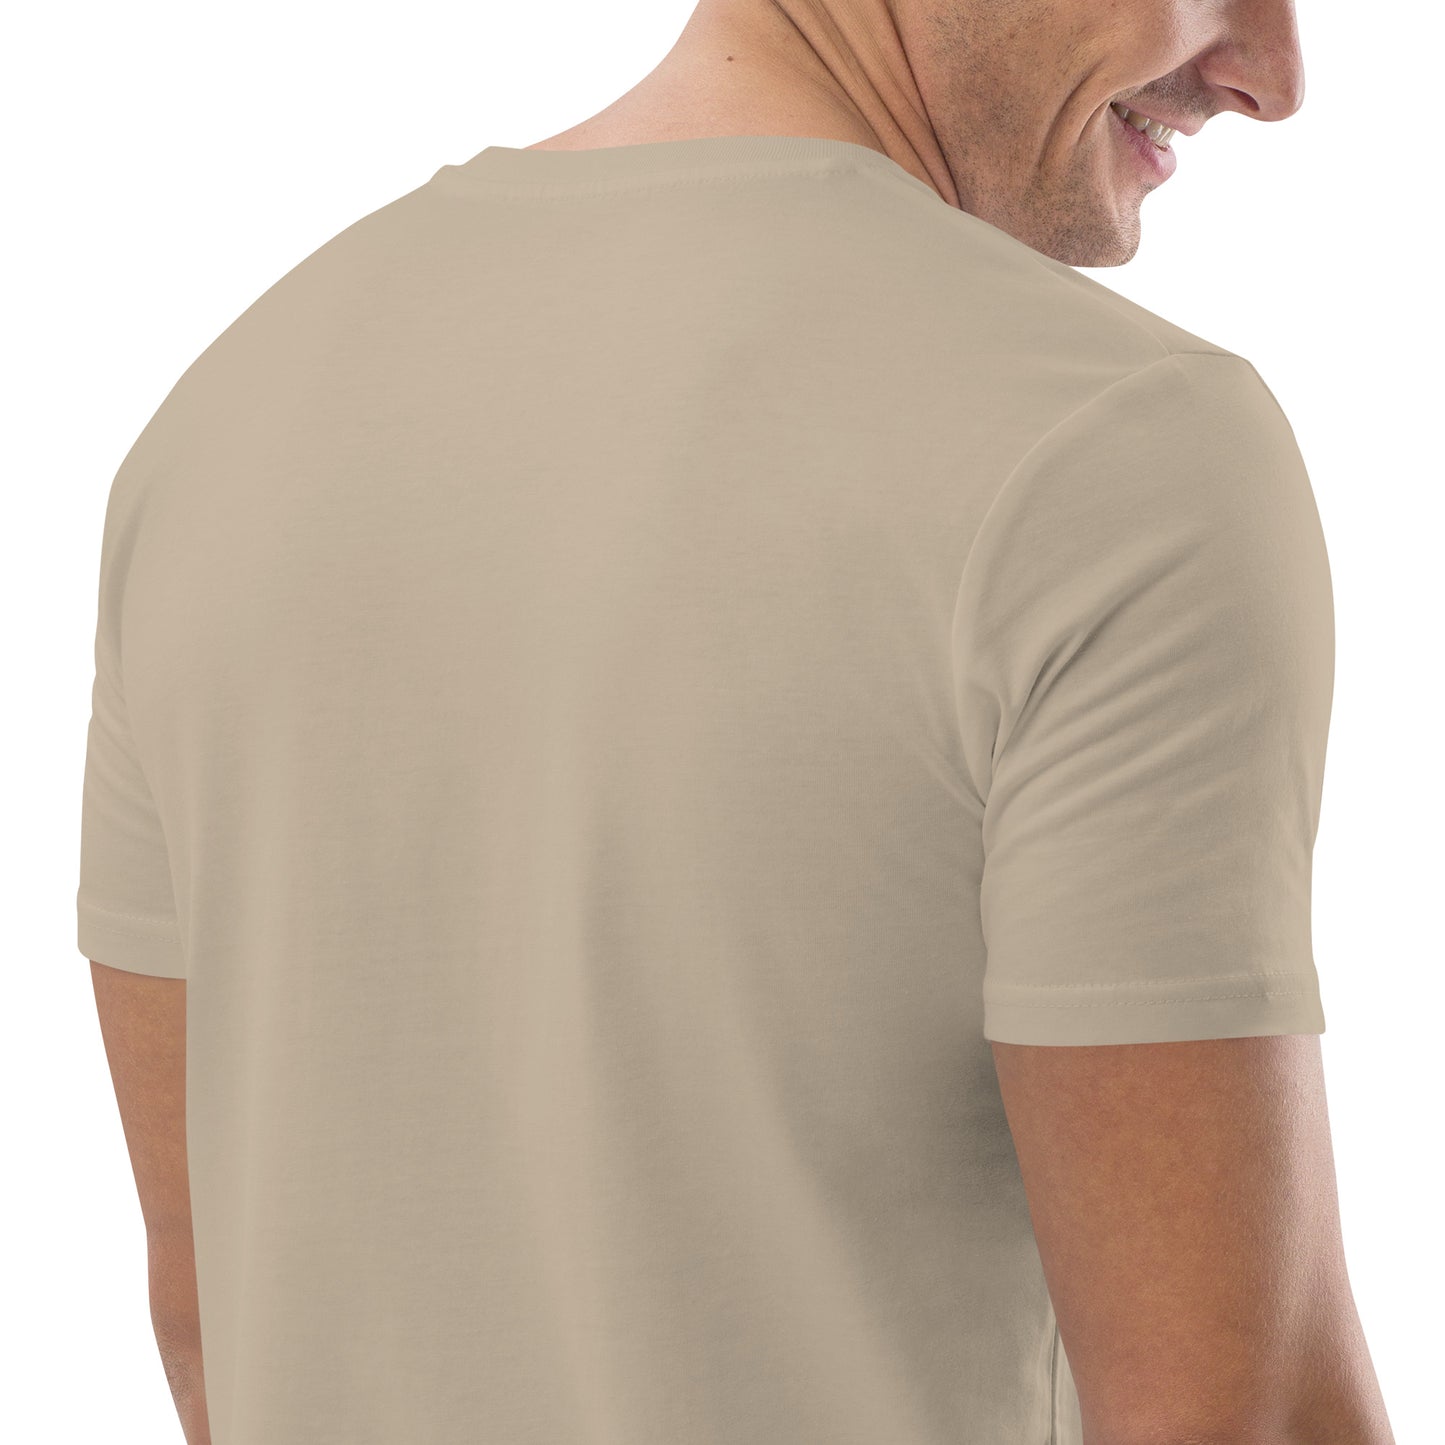 T-shirt unisexe en coton bio Brodé Core Corsu